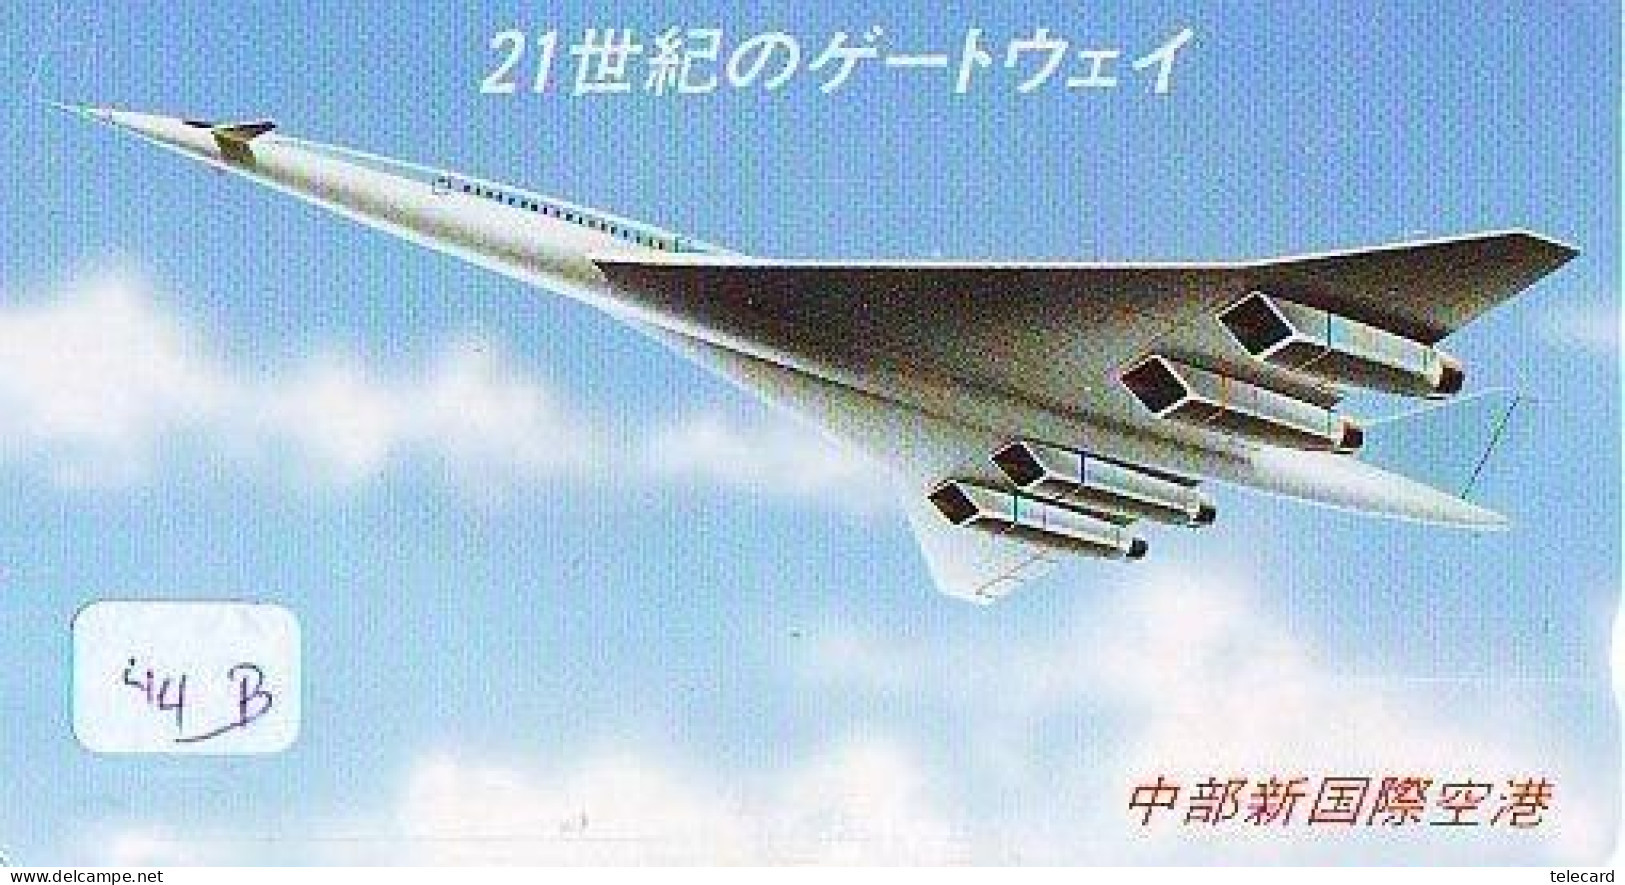 Télécarte Japon * Avion * 290-15574  * CONCORDE (44b)  Air France - Japan Air Plane Phonecard * Aeroplani Aeroplanos - Aviones